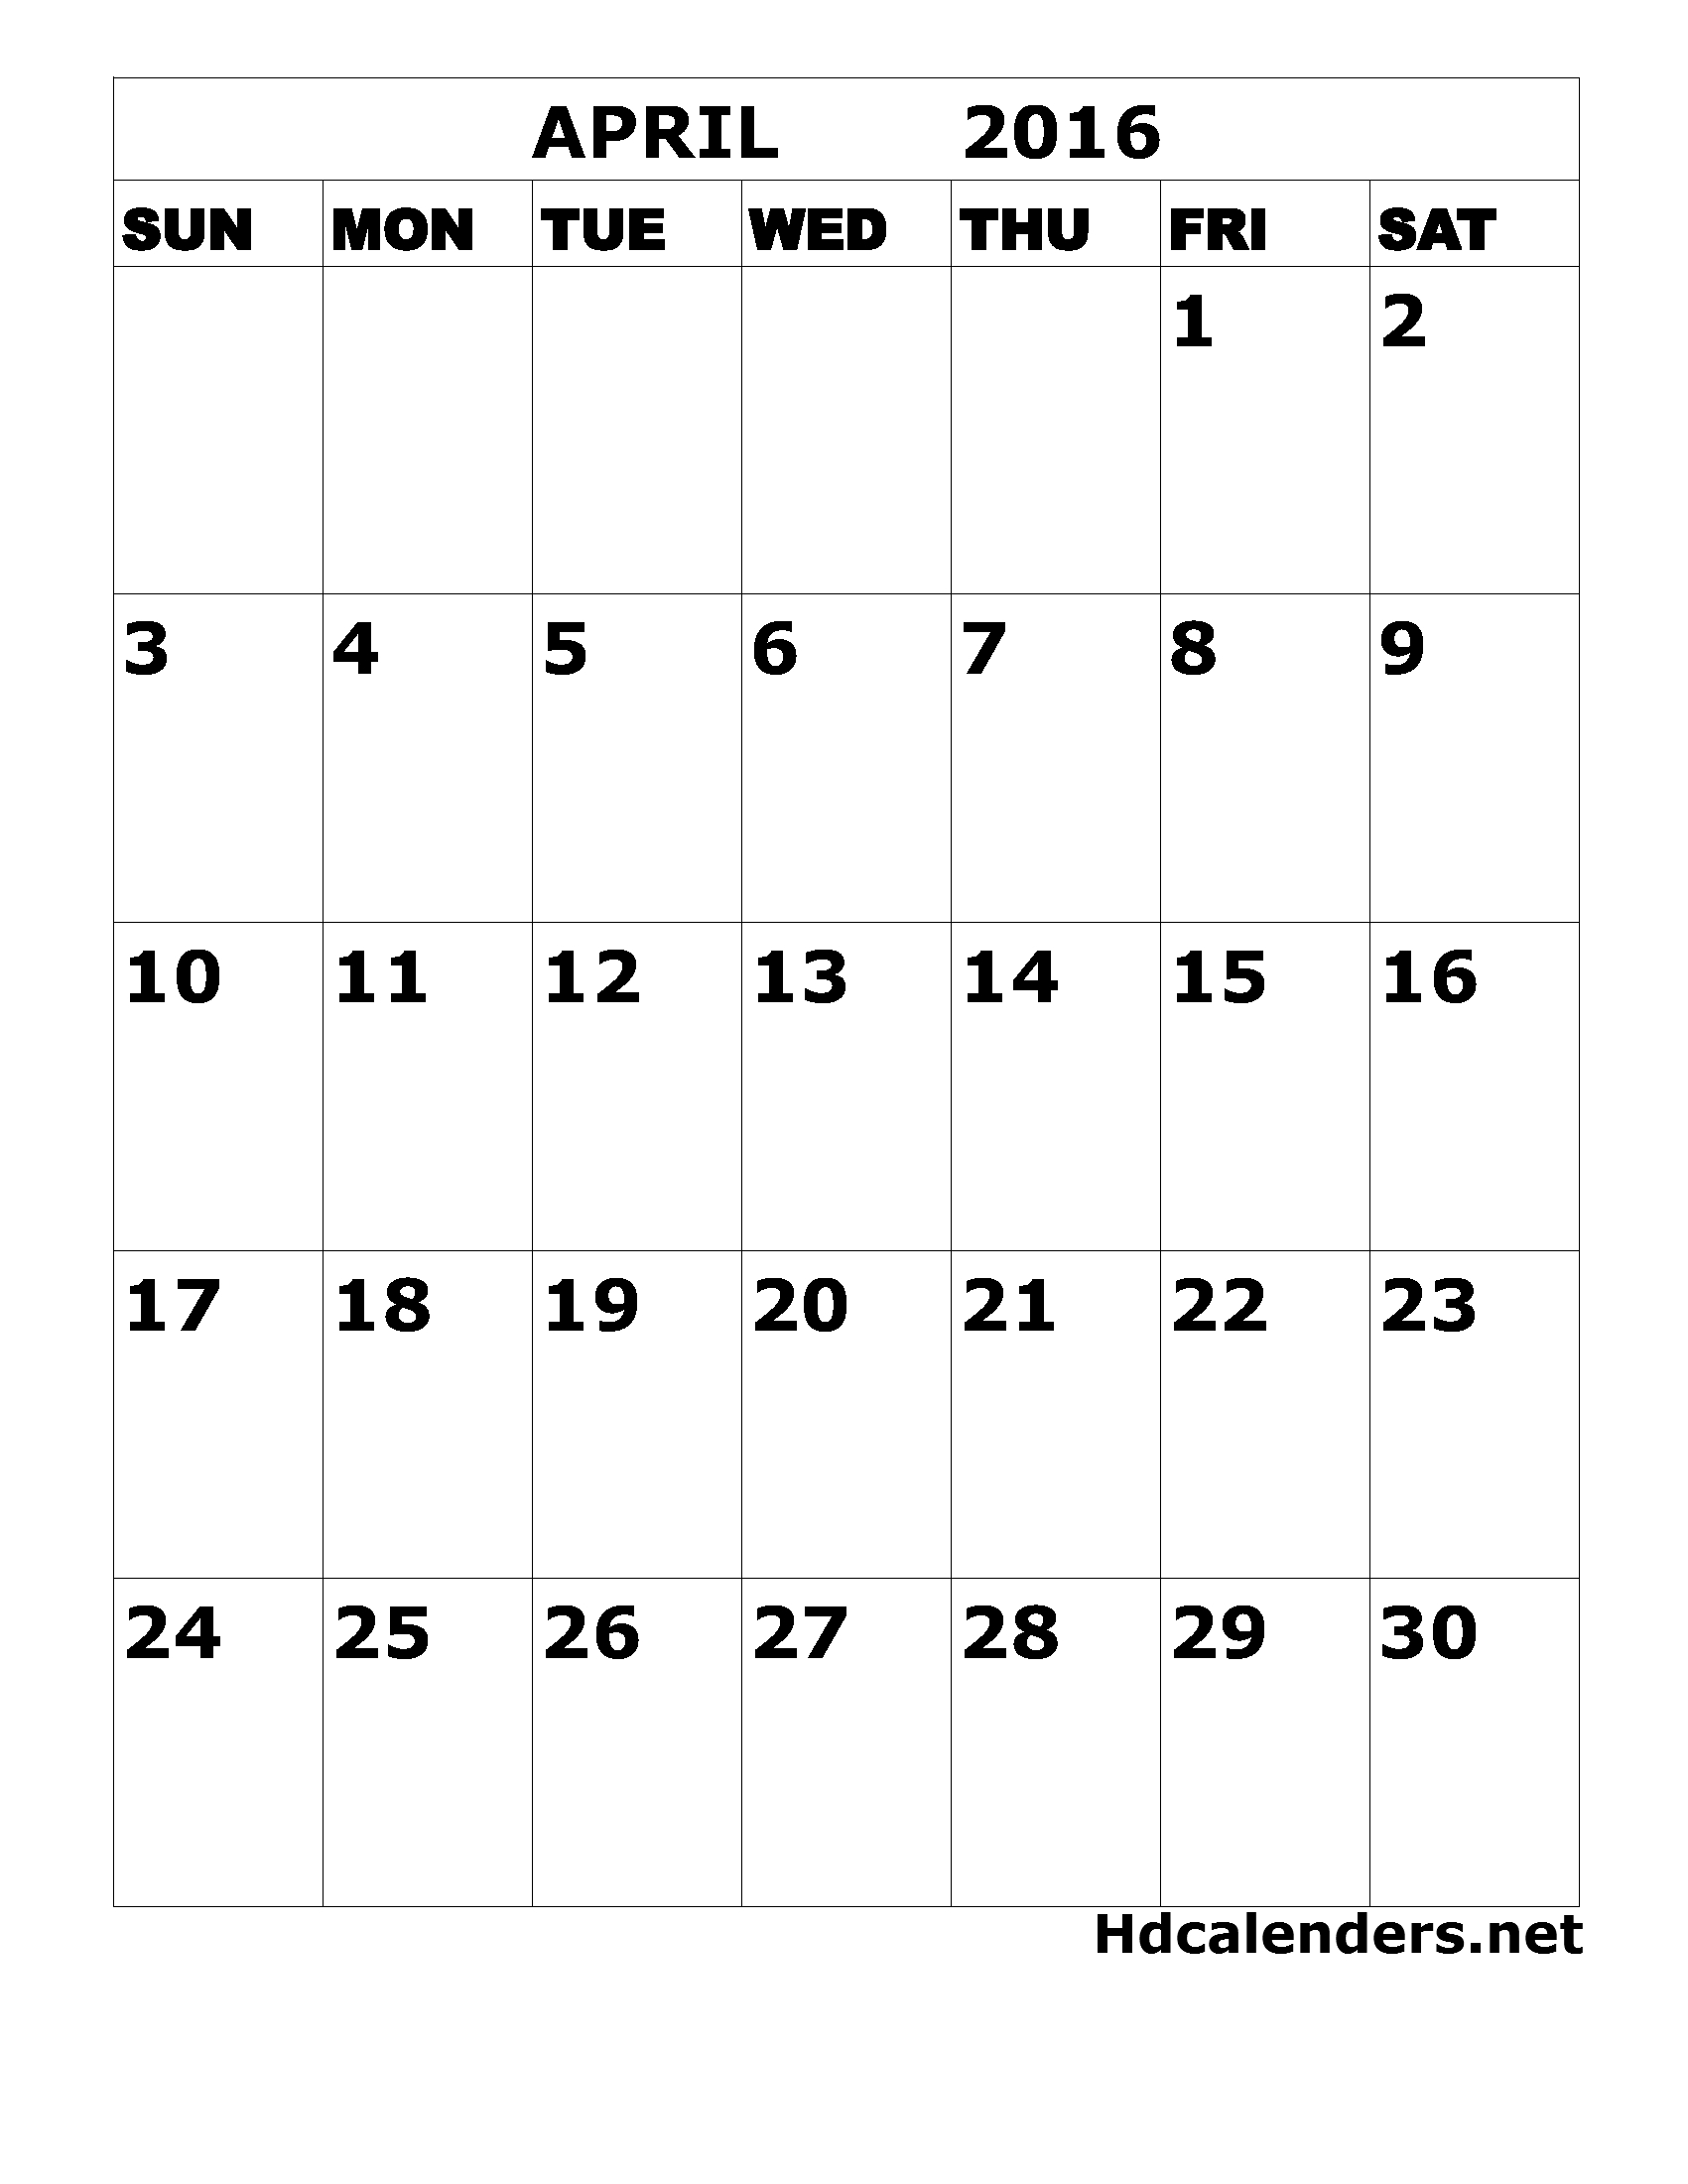 April 2016 Calendar Wallpaper free